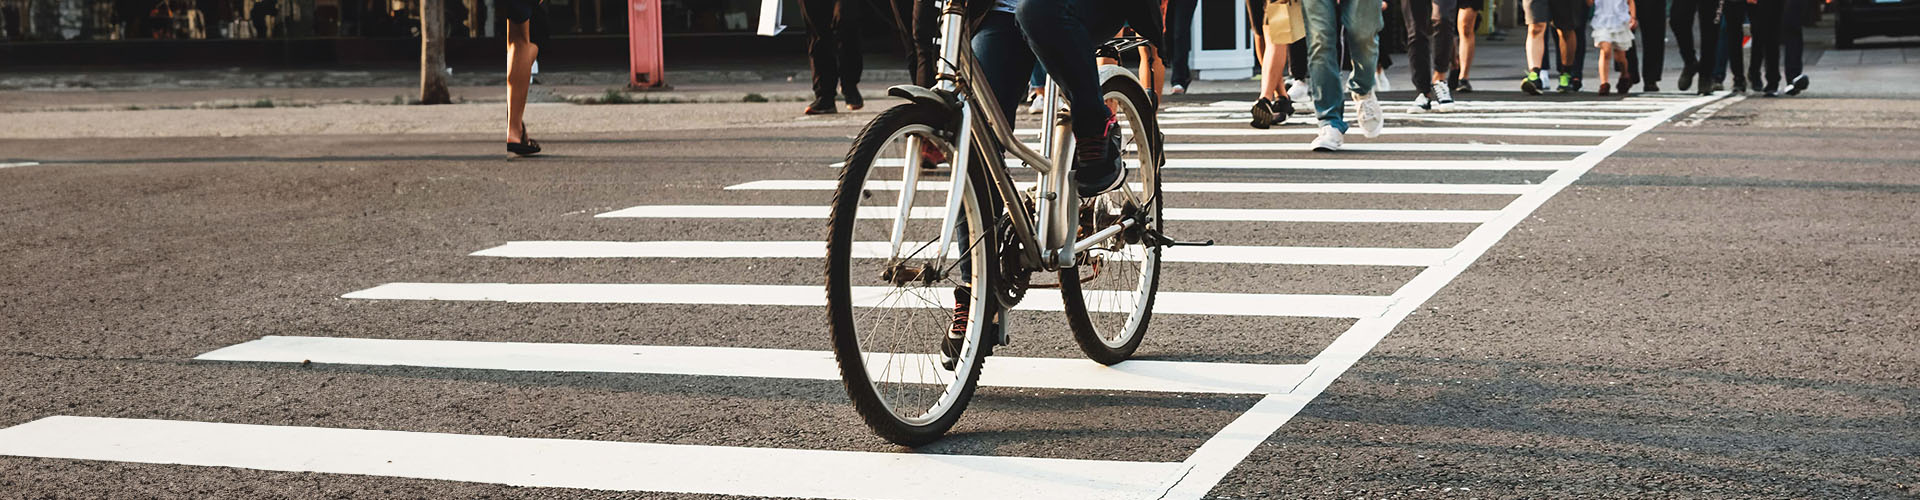 bike lane street crosswalk with people ride bicycle crossing urban city lifestyle